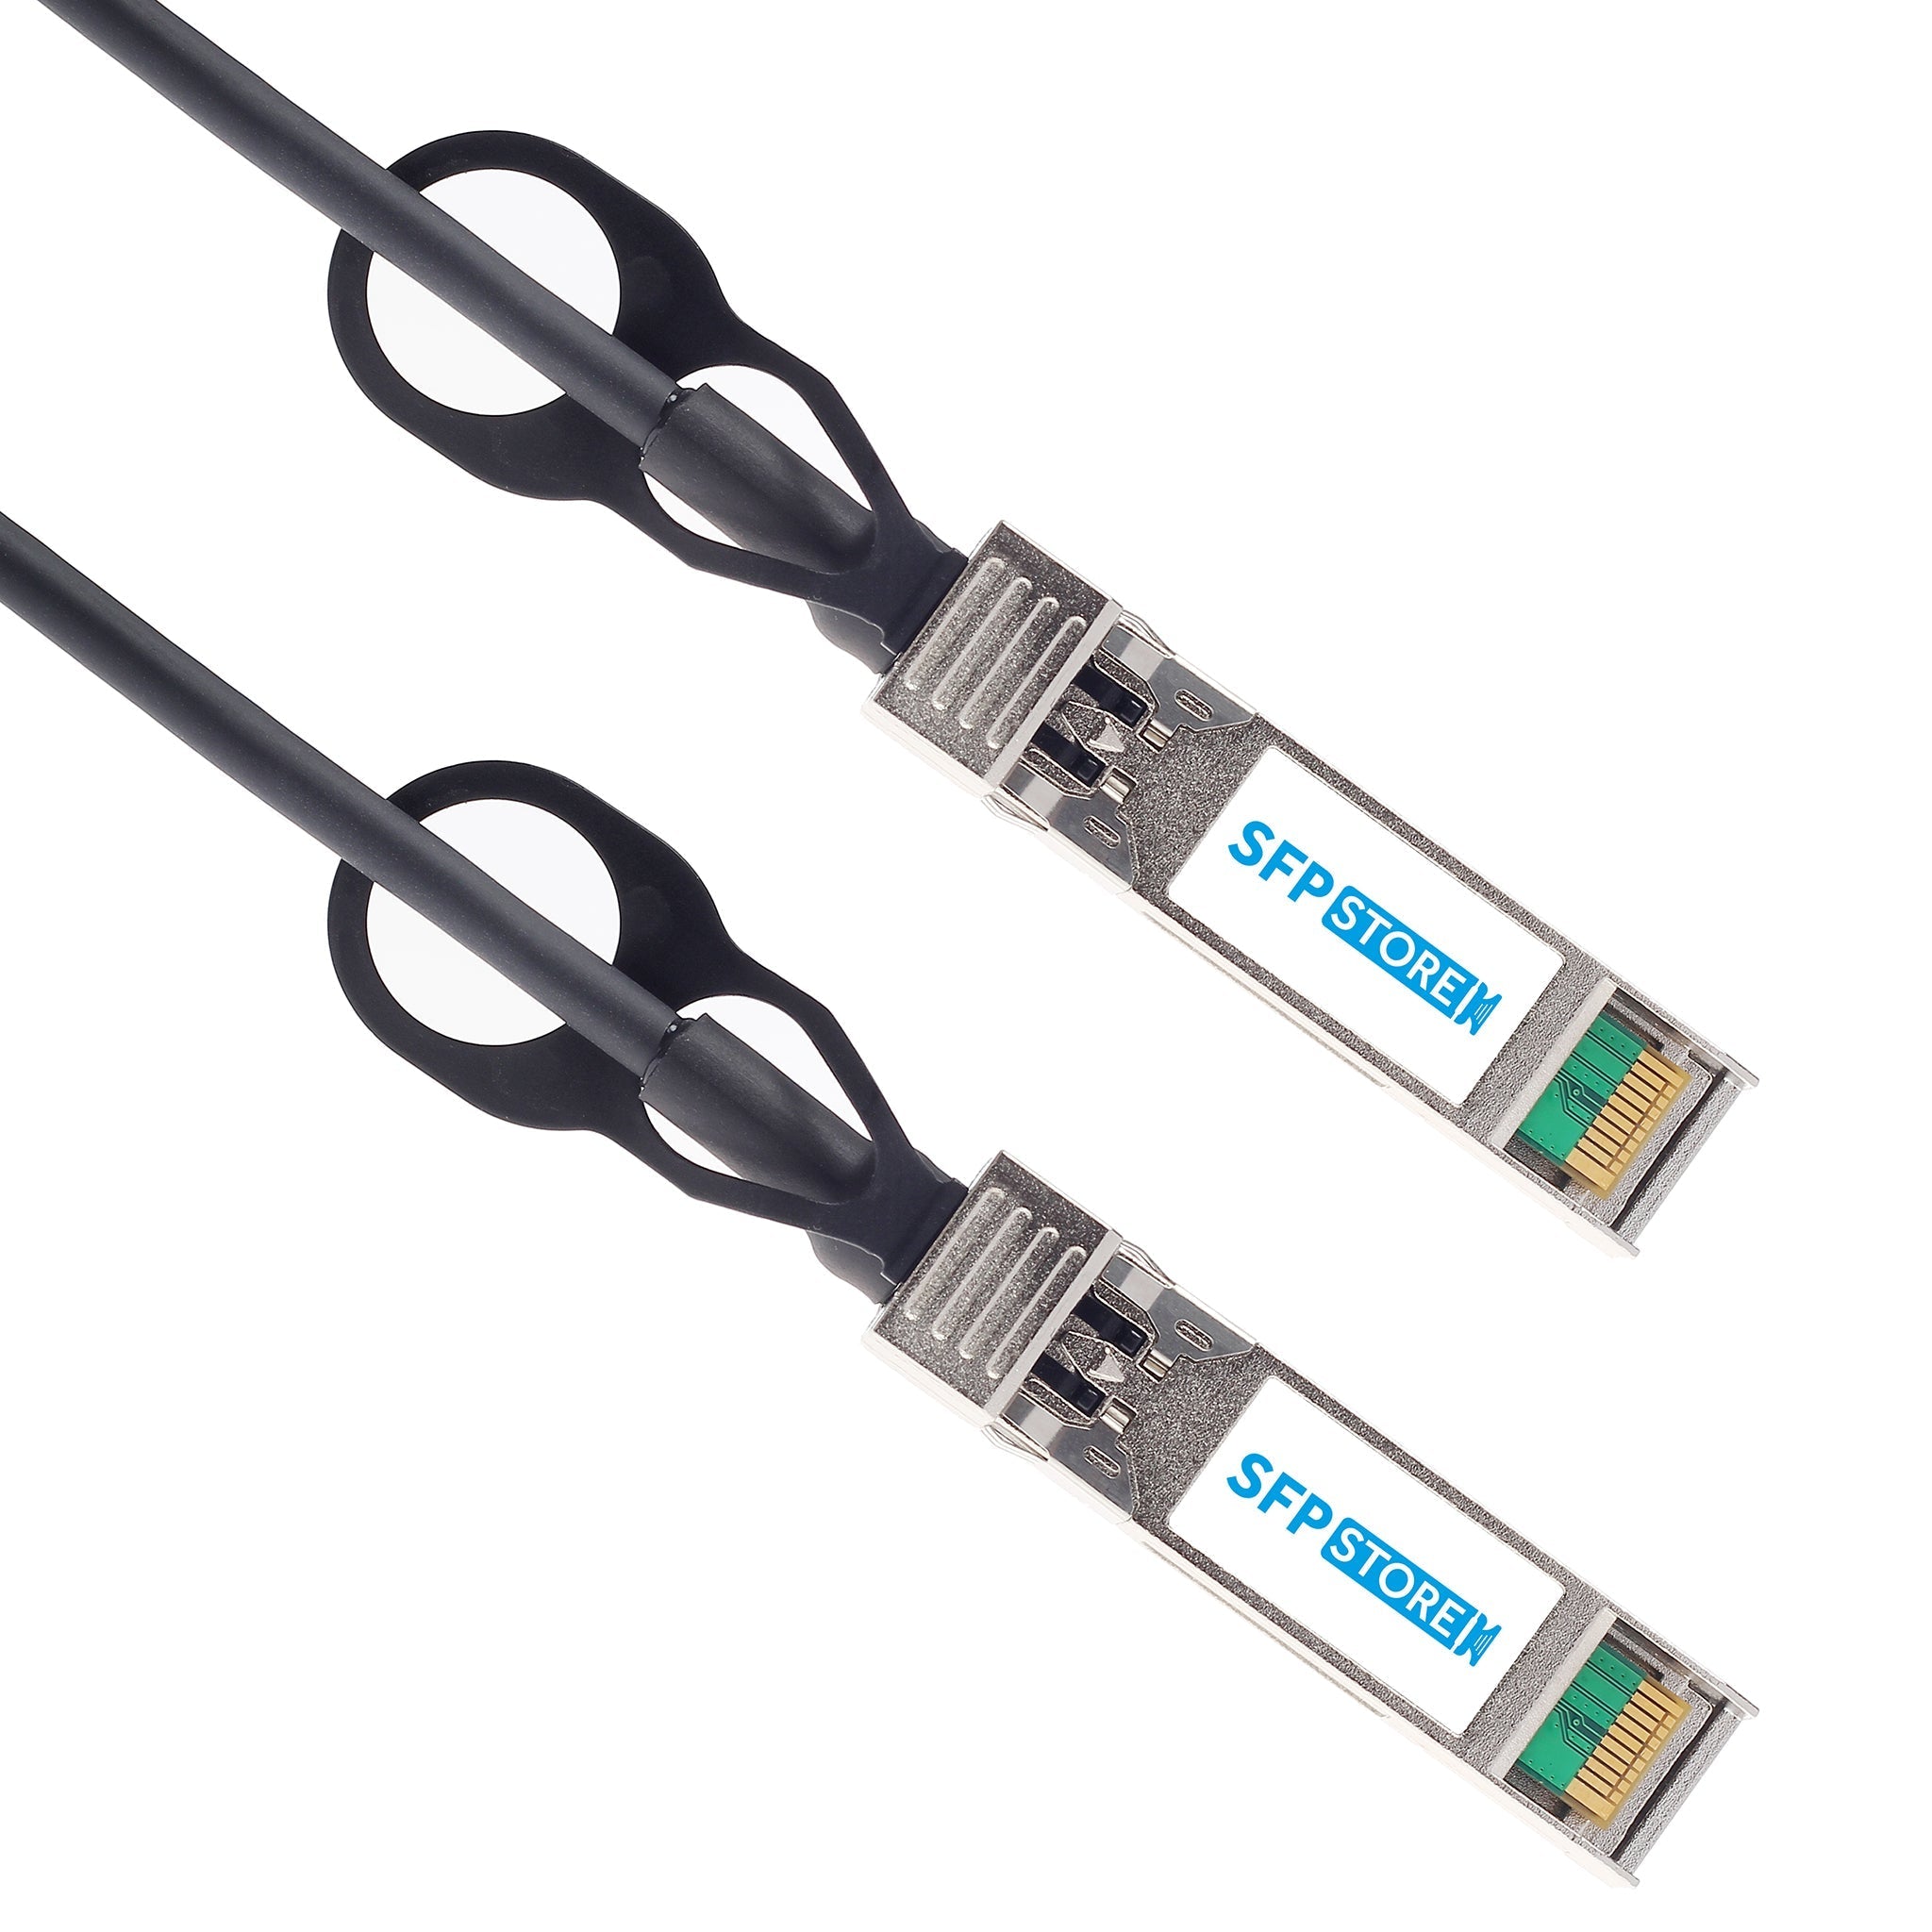 AT-SP10TW1-C - 1m Allied Telesis Compatible 10G SFP+ Passive Direct Attach Copper Twinax Cable